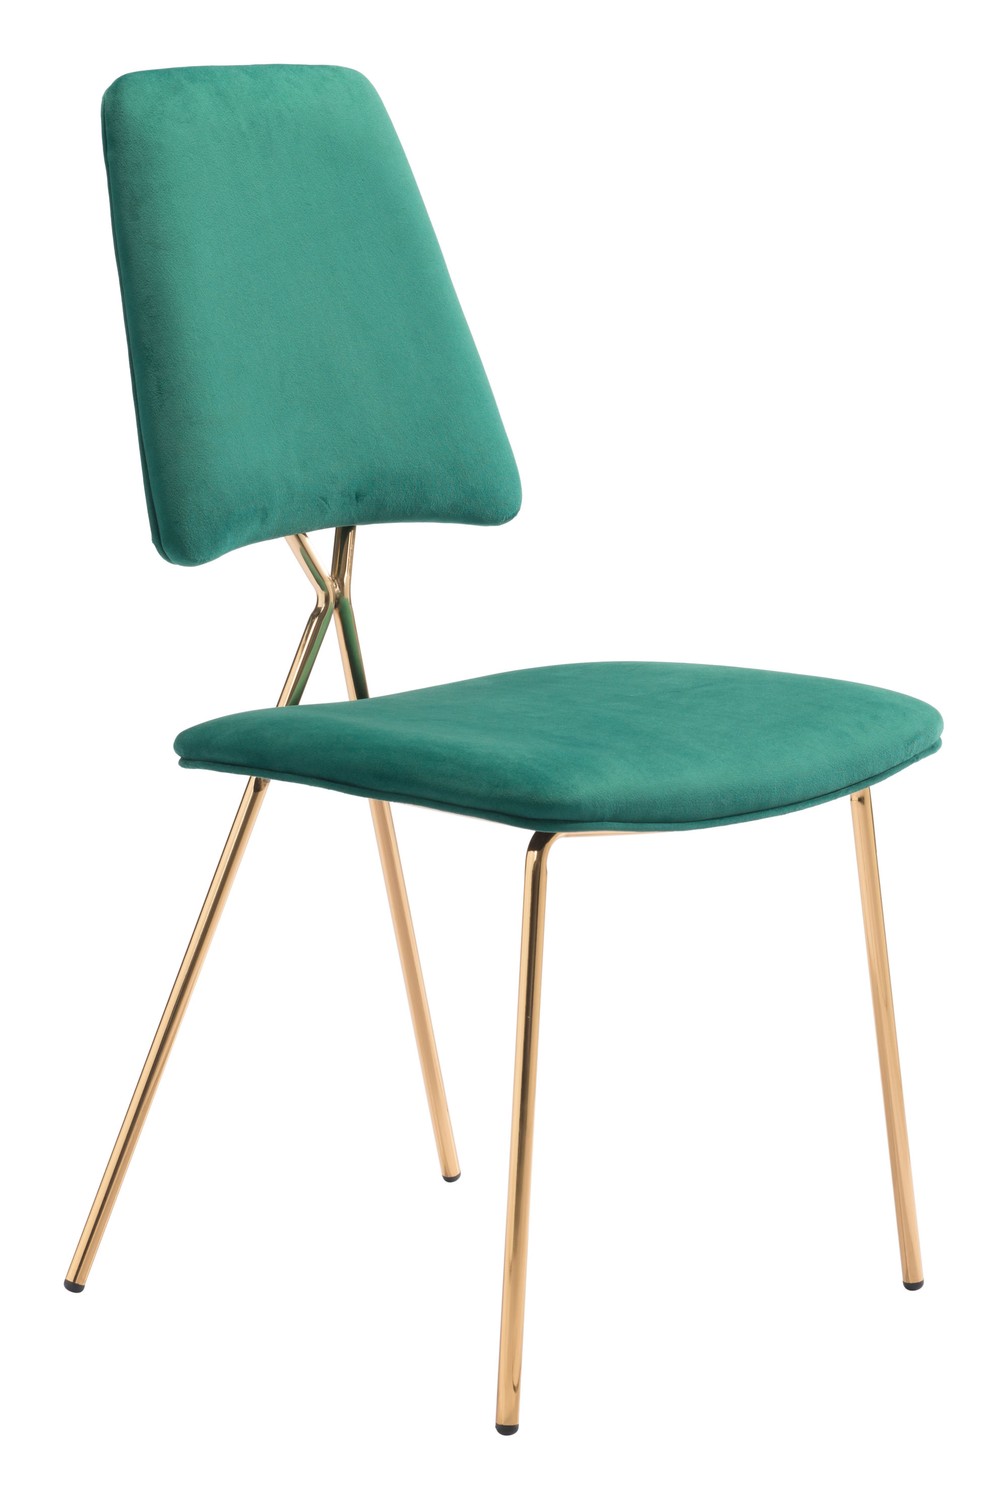 19.7" x 21.9" x 35.8" Green & Gold, Velvet, Steel & Plywood, Chair - Set of 2